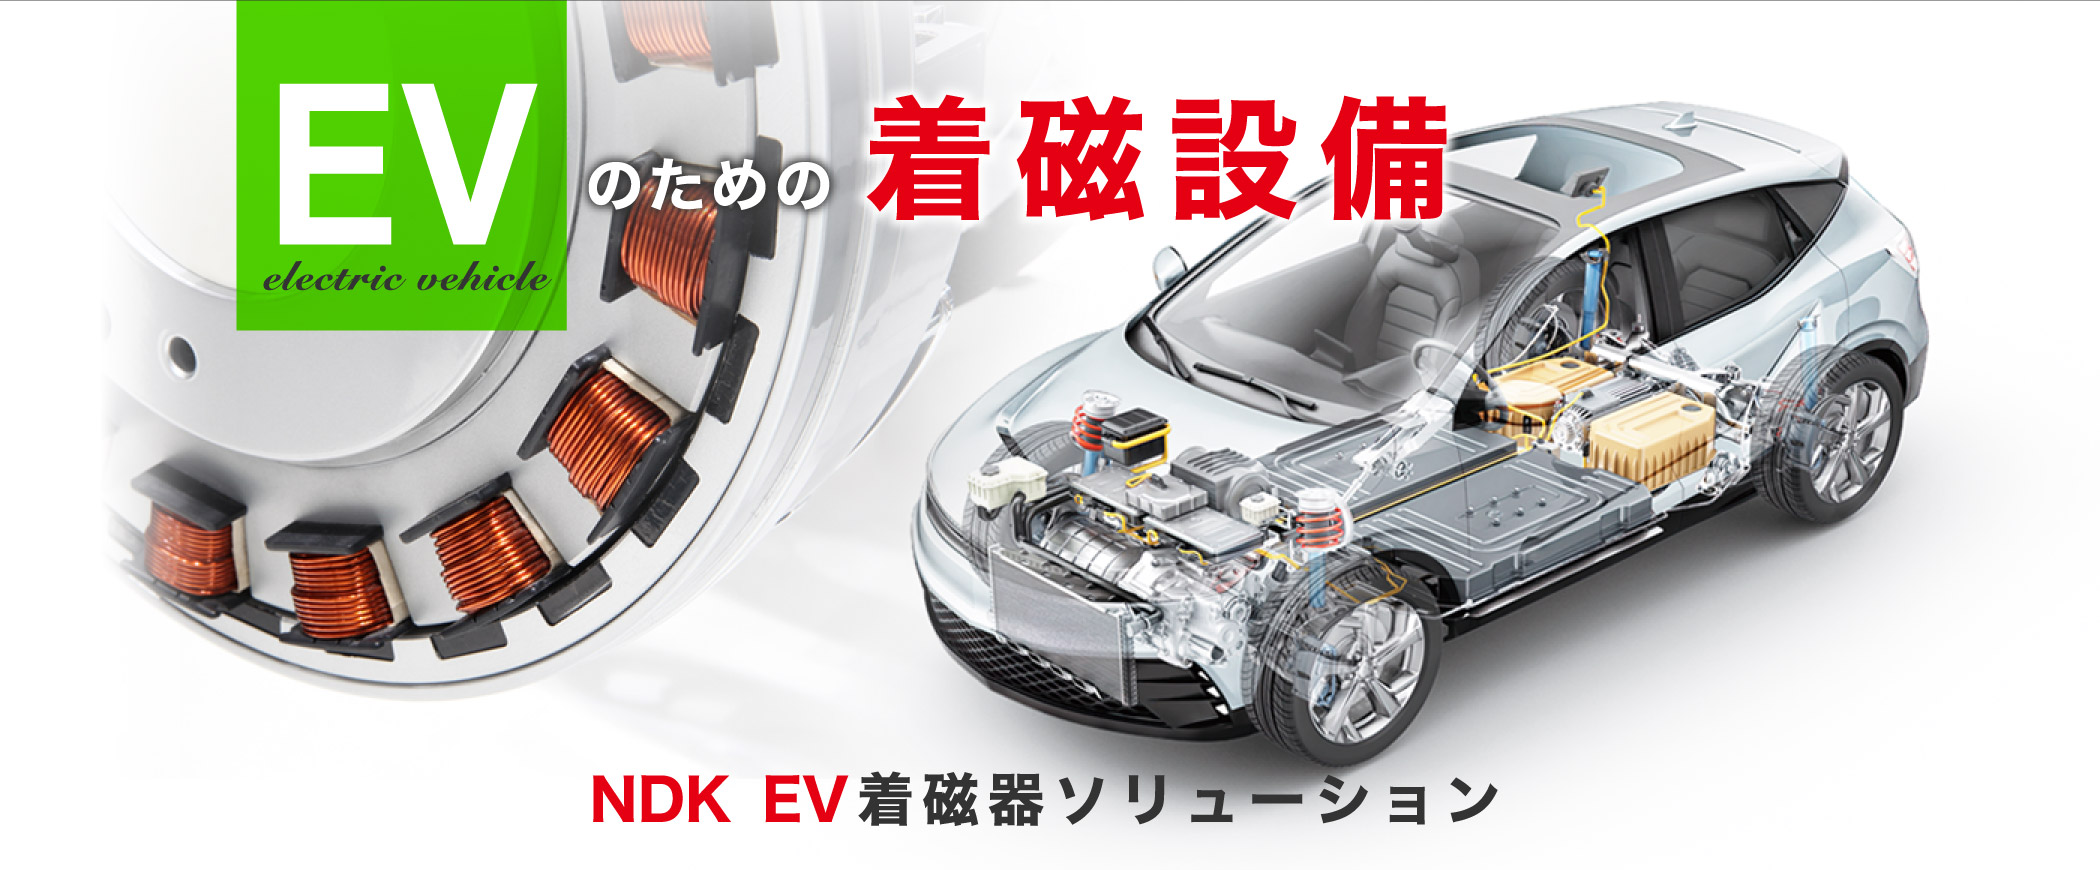 EVのための着磁設備 NDK EV着磁器ソリューション